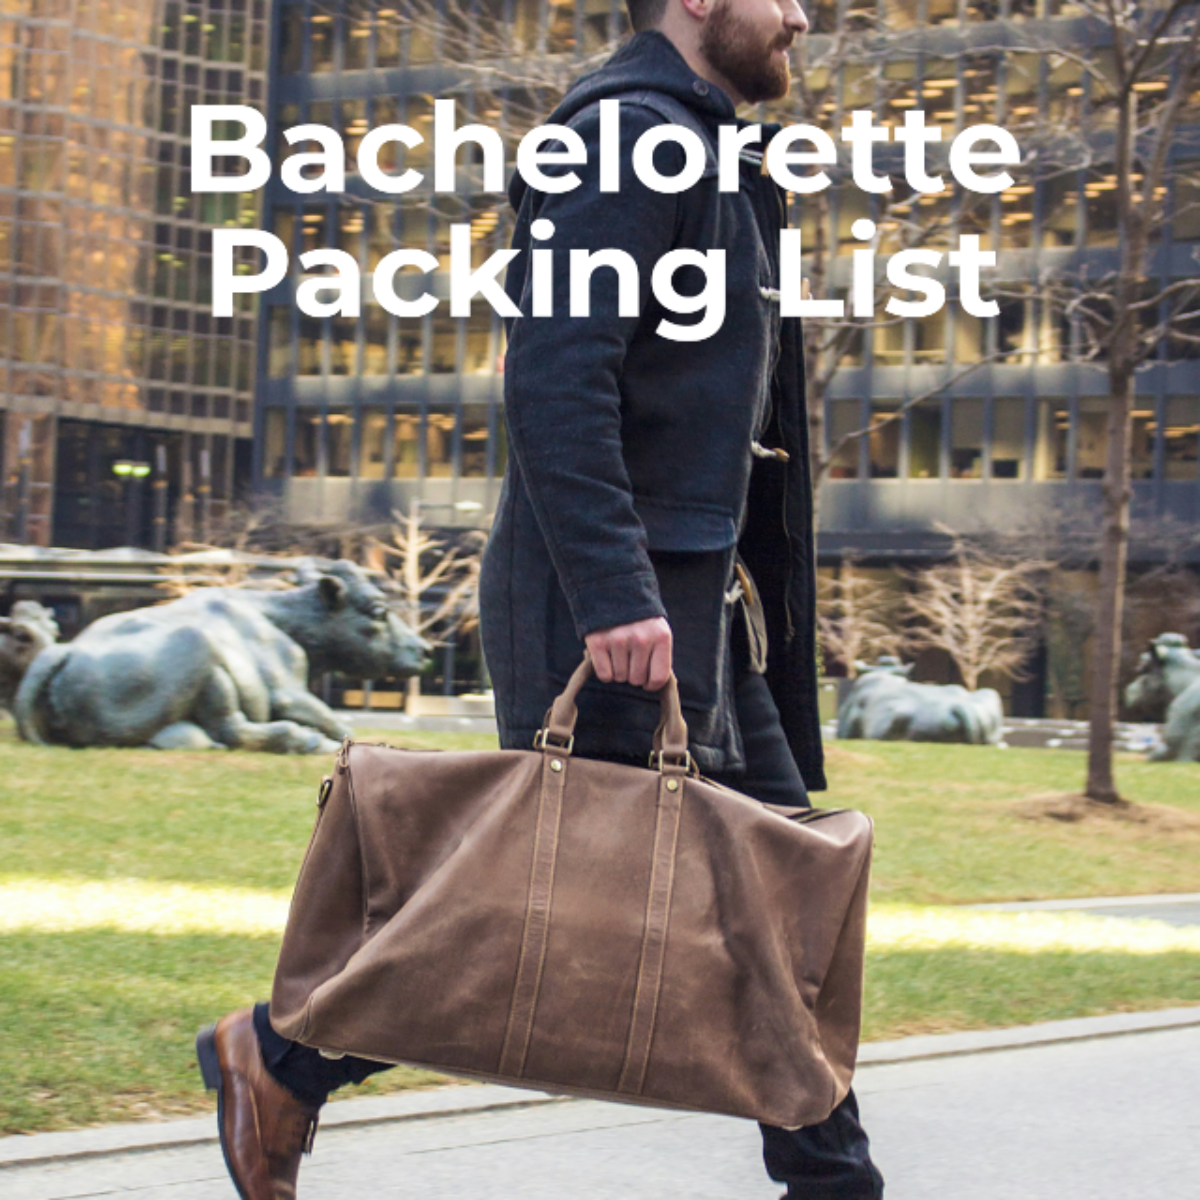 Bachelorette Packing List Template